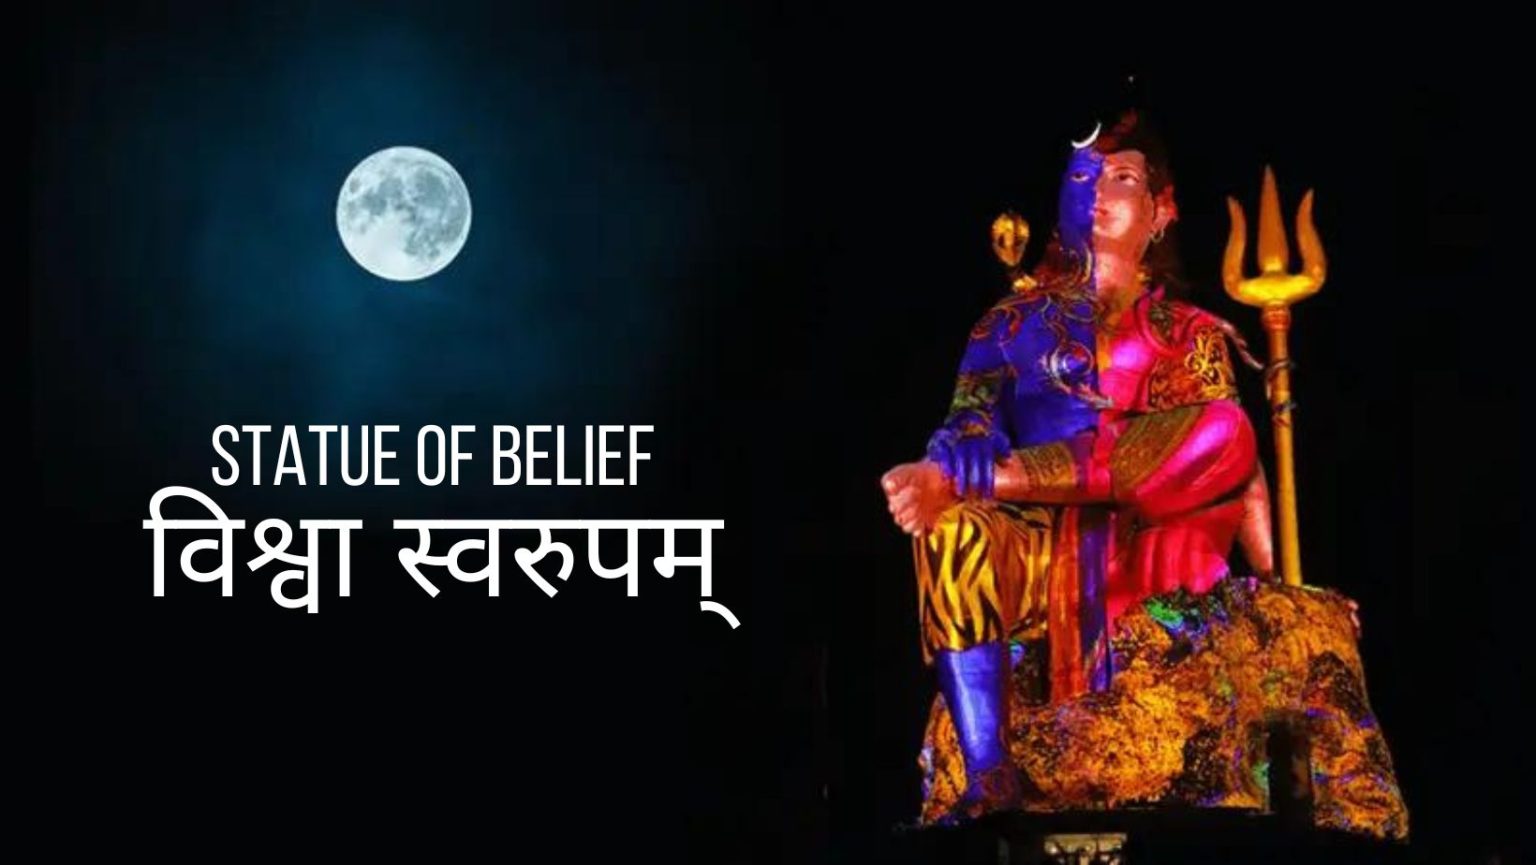 Statue of Belief Vishawa Swaroopam (विश्वा स्वरुपम्)